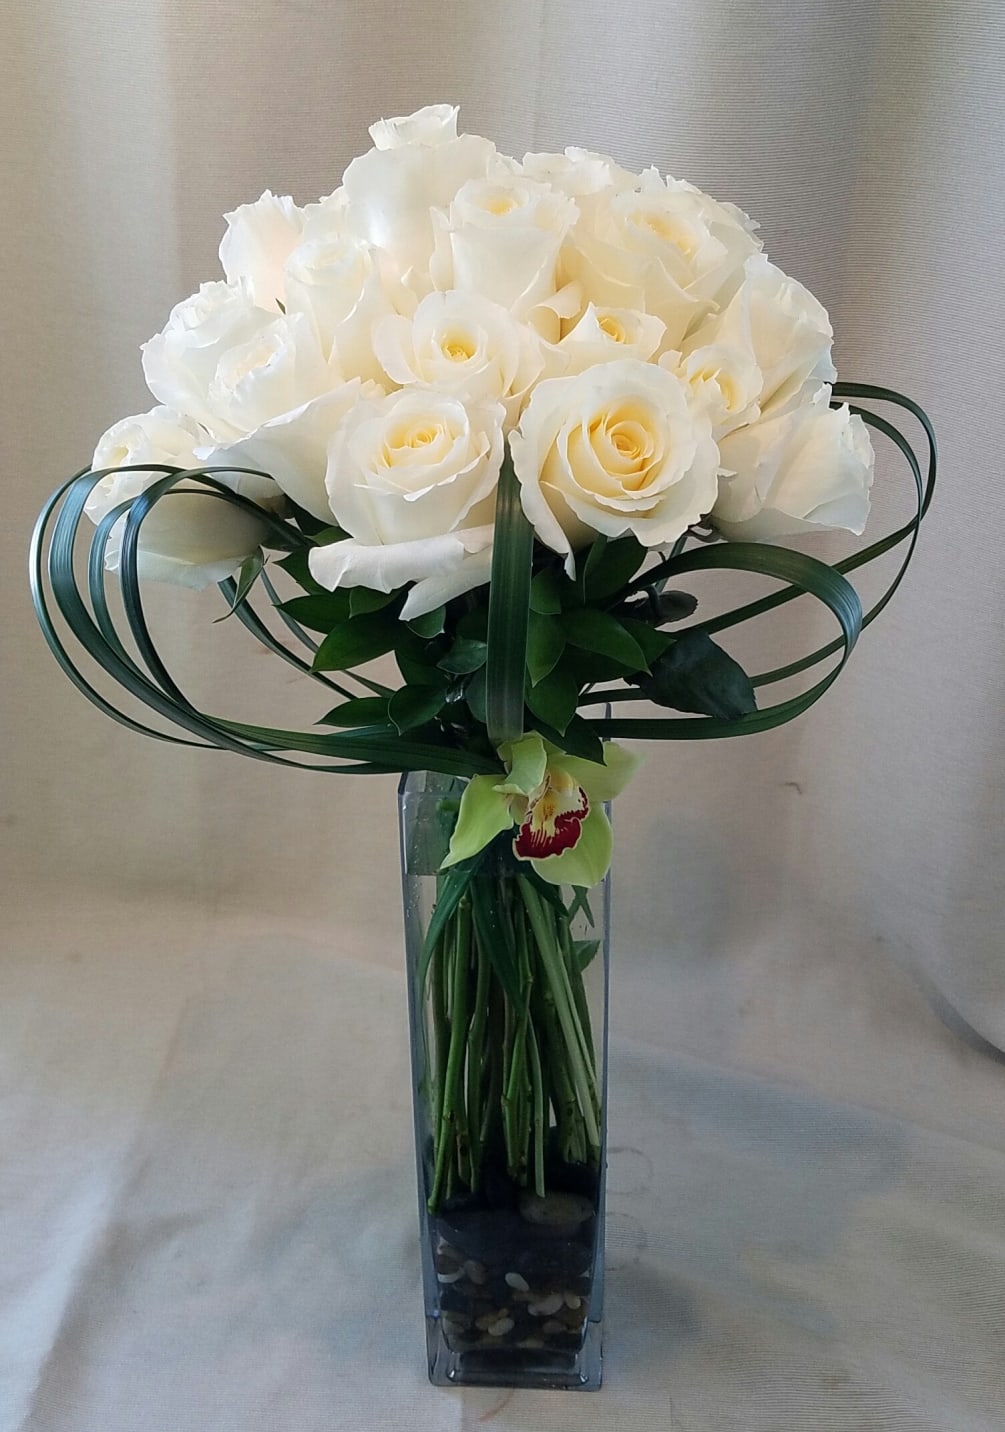 Two dozen white roses in a modern design